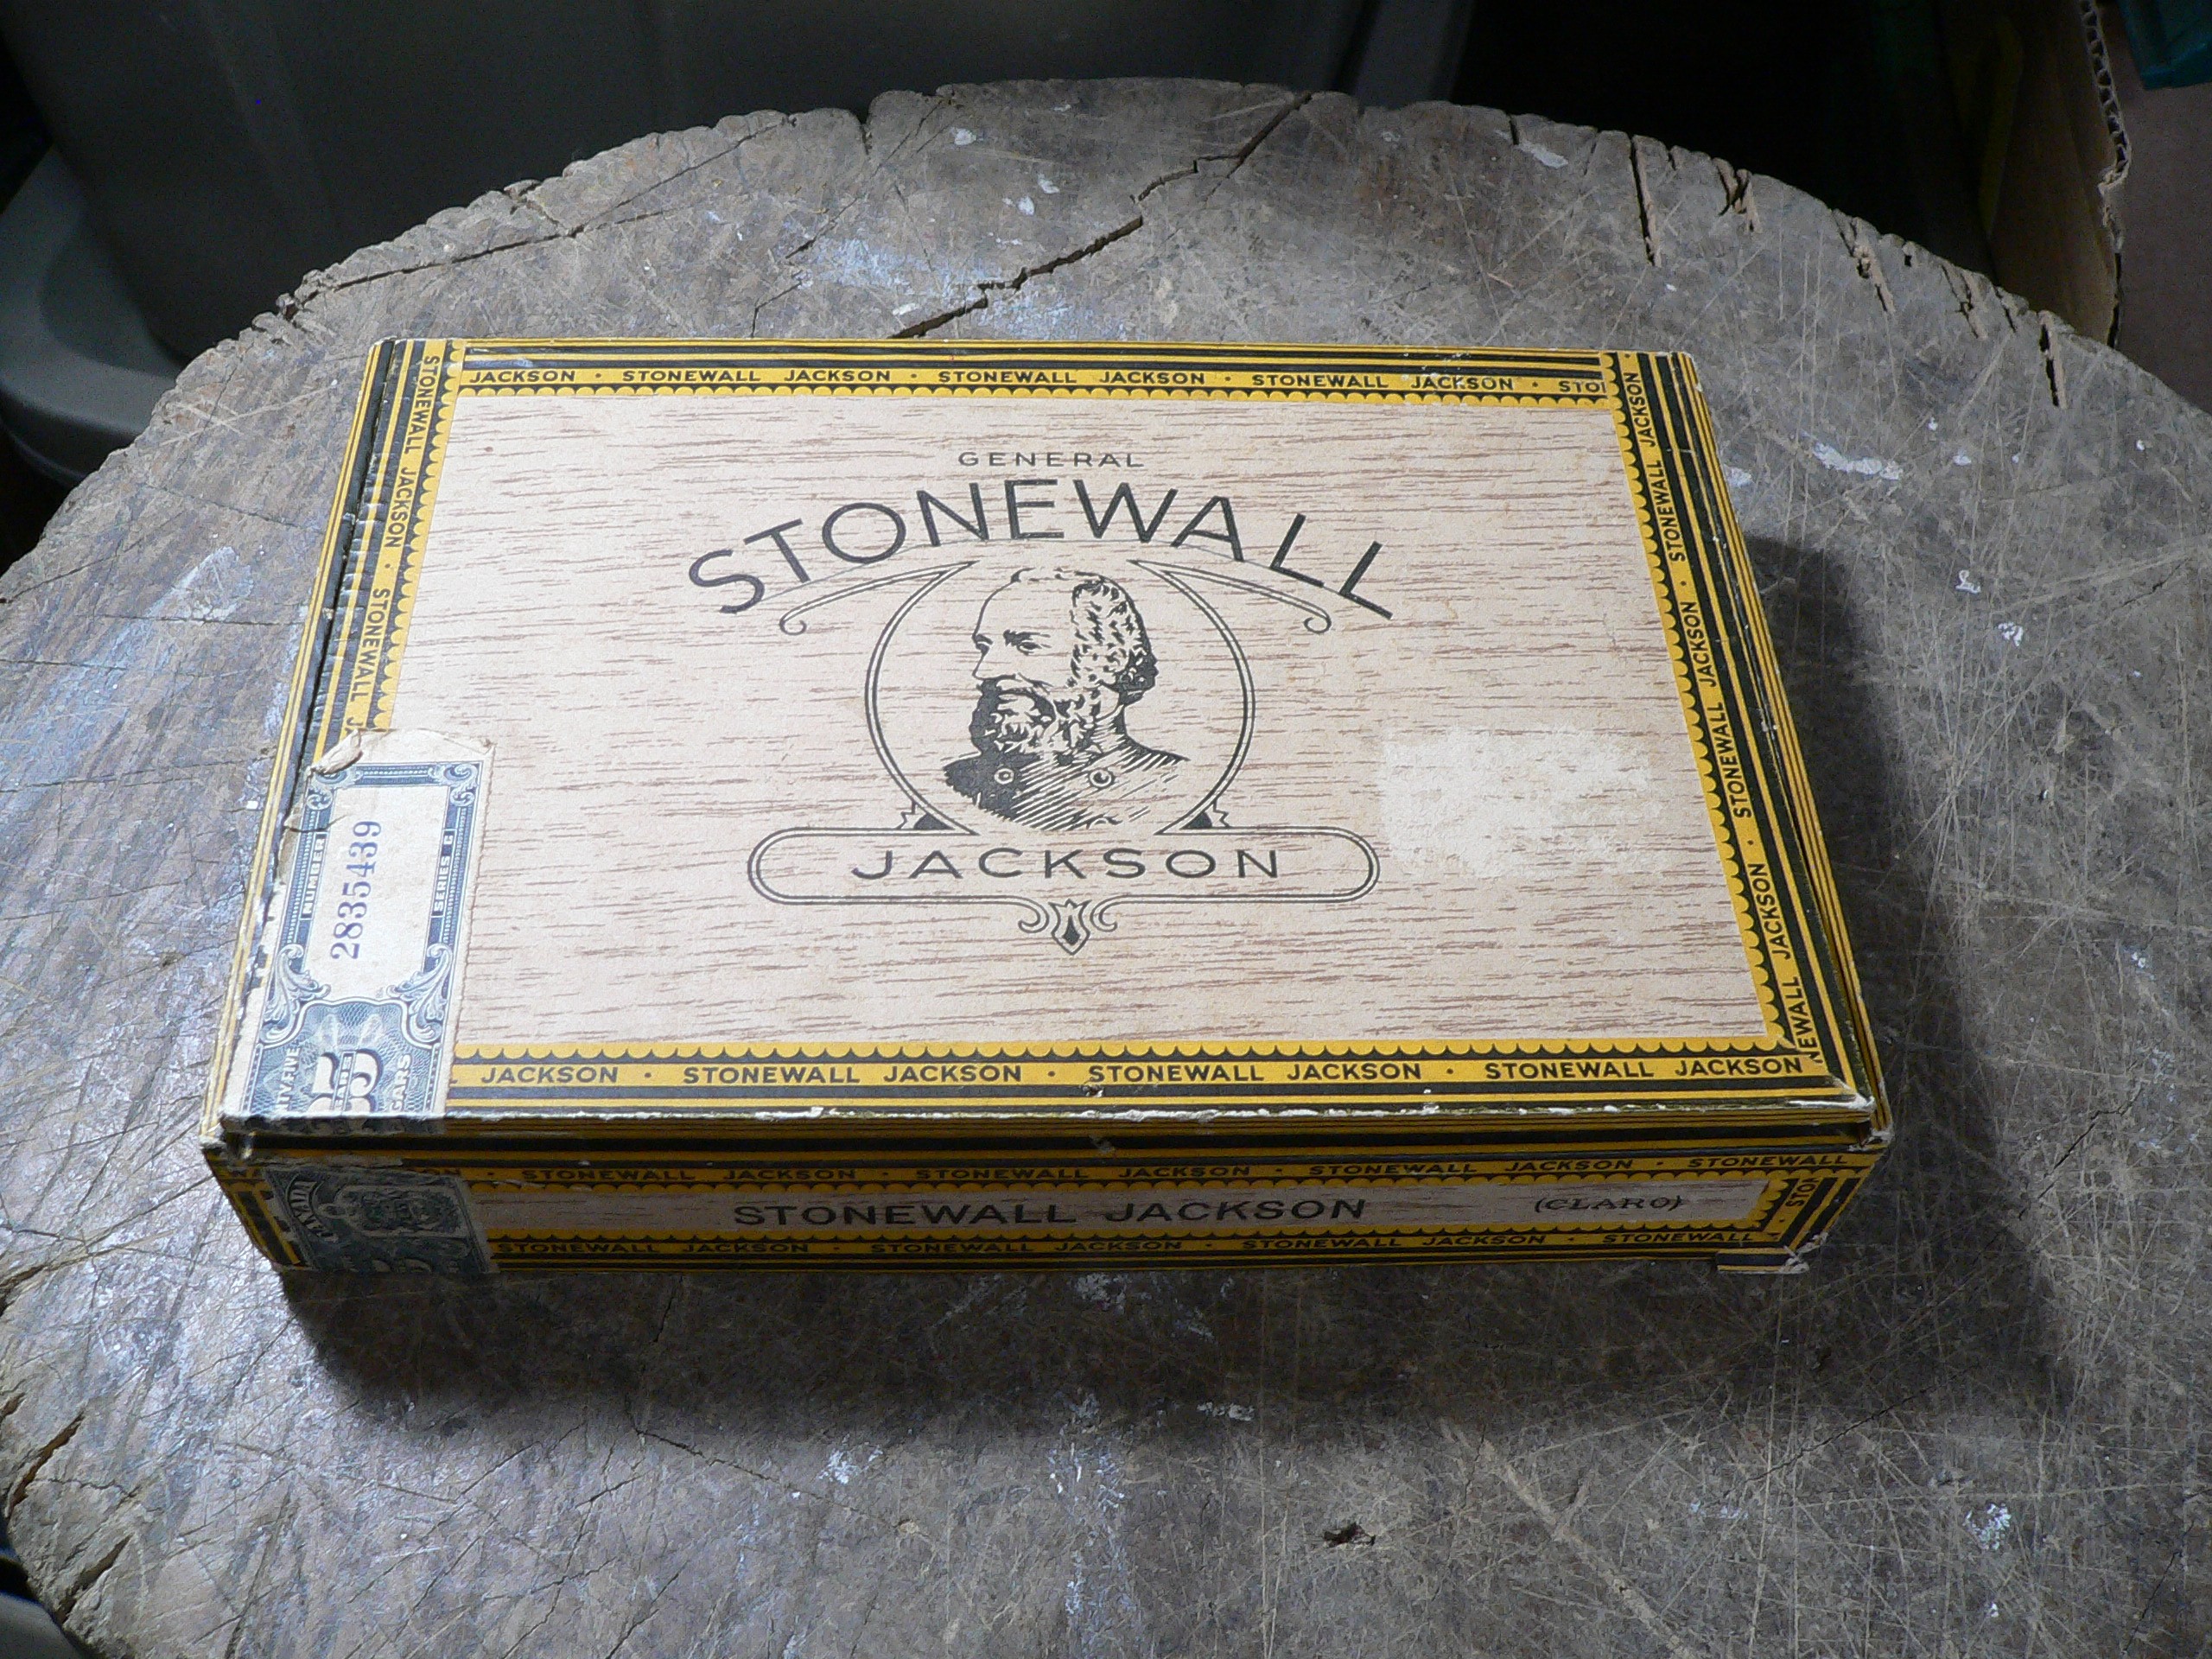 Boite antique General Stone Wall Jackson # 9140 